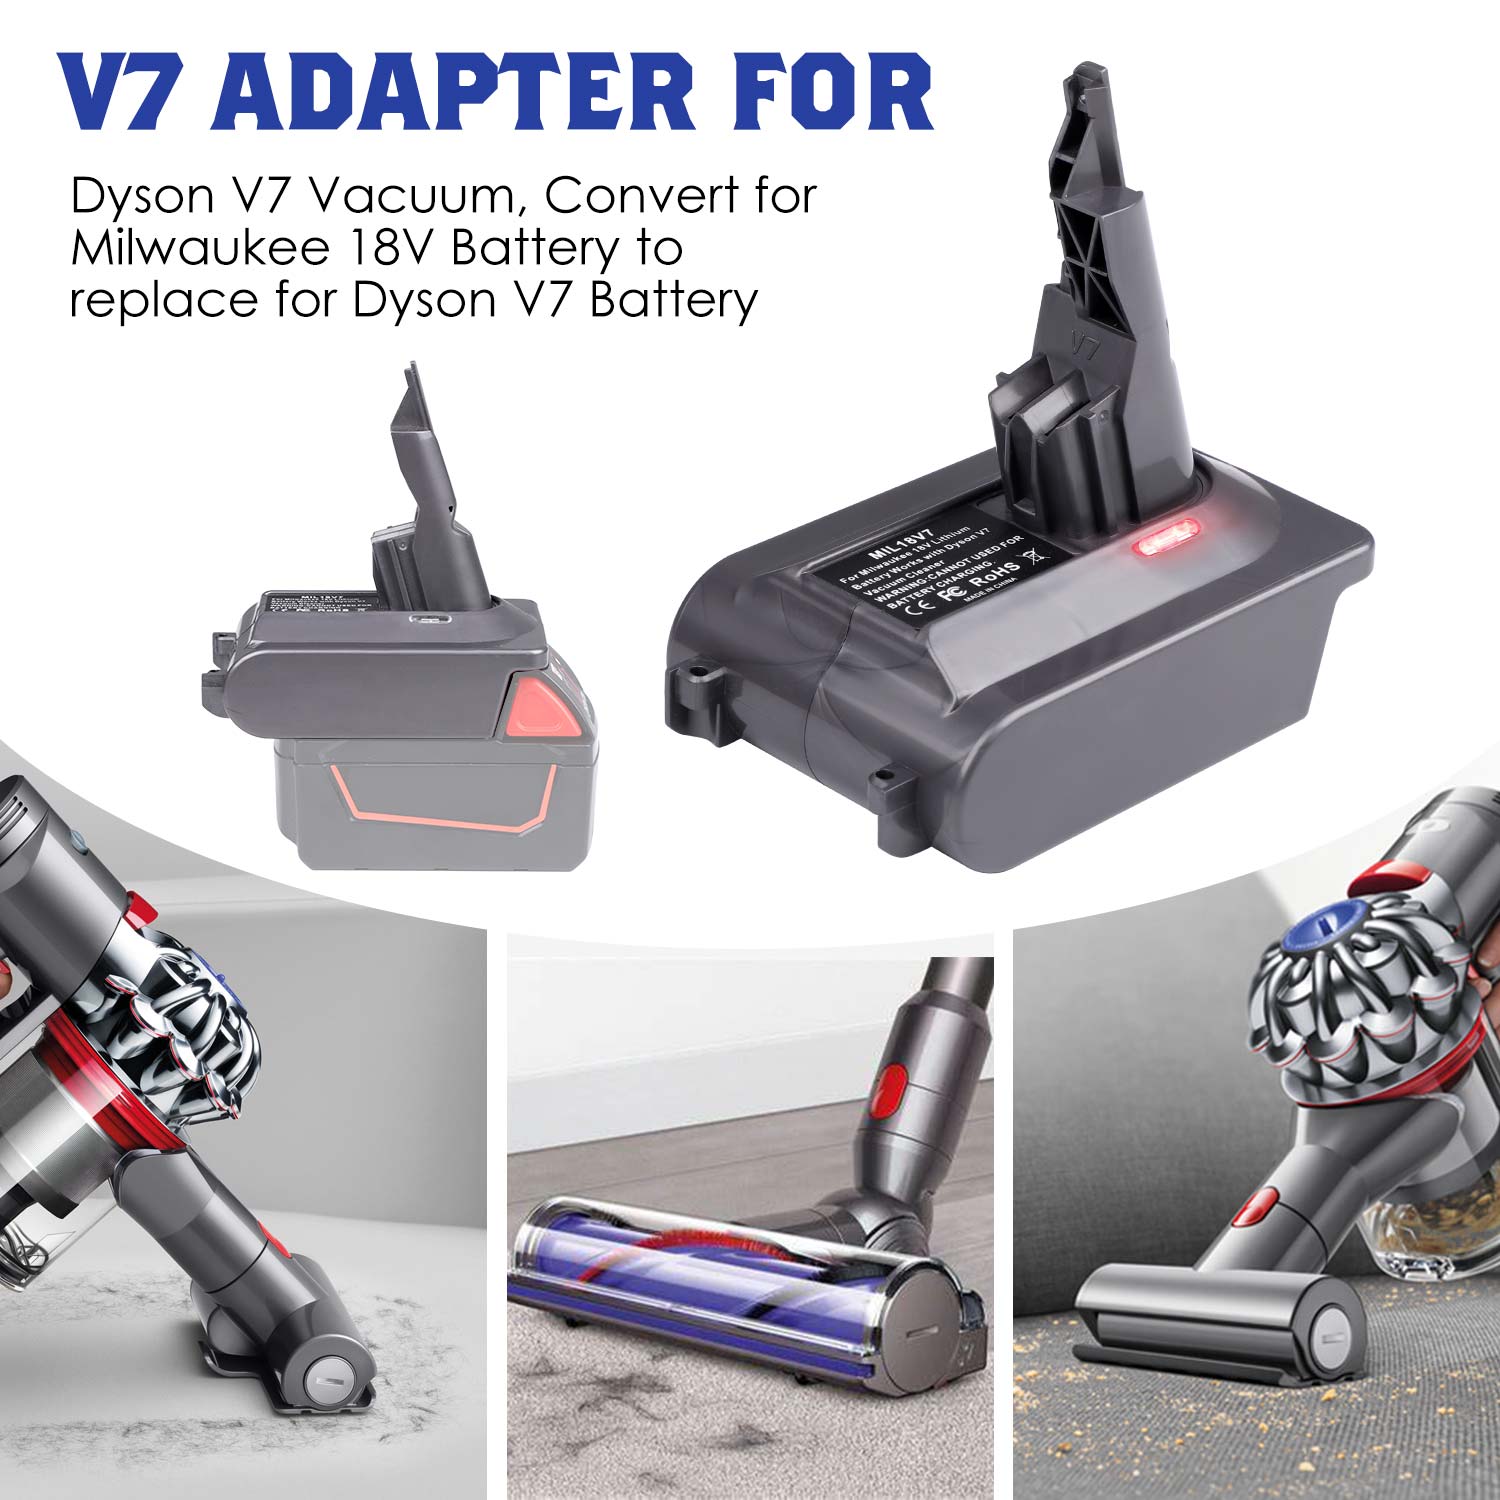 Mo Dyson V7 Adapter mo Milwaukee M18 18V Lithium Battery Converter ki Dyson V7, Whakamahia mo Dyson V7 Vacuum Cleaner